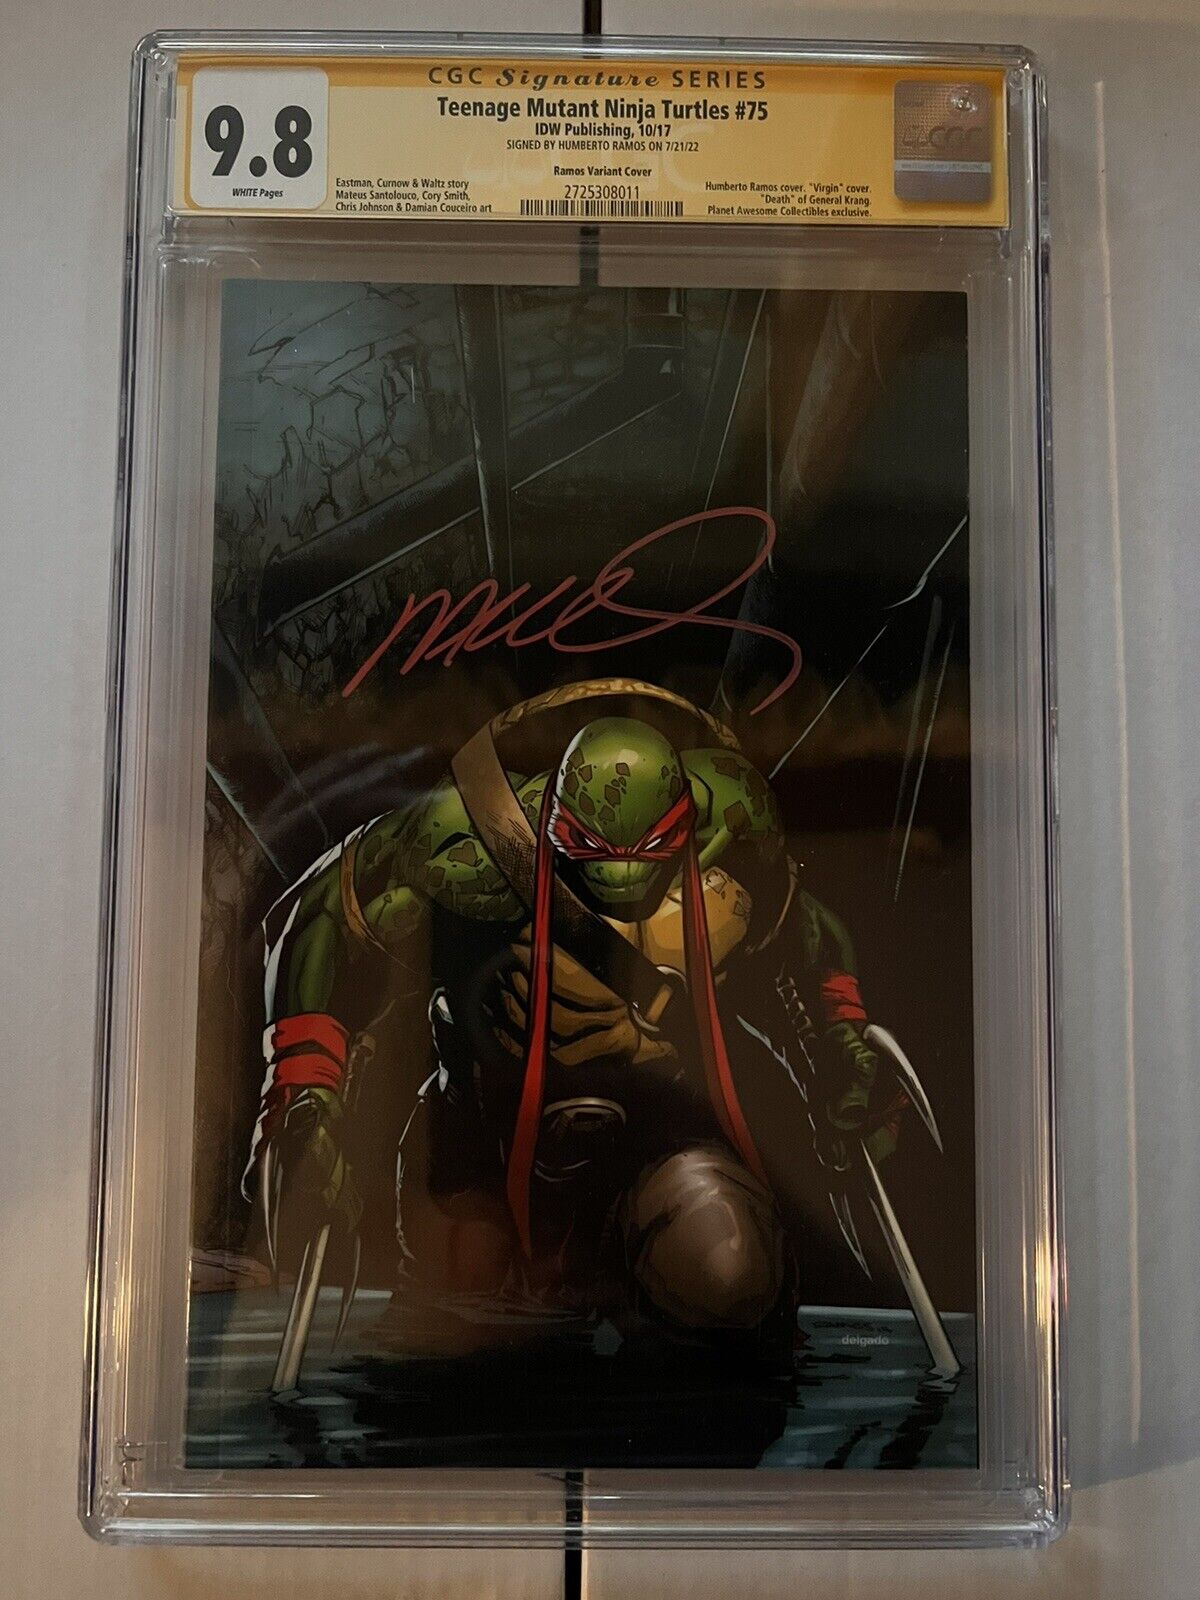 Teenage Mutant Ninja Turtles #75 CGC SS 9.8 - signed Humberto Ramos